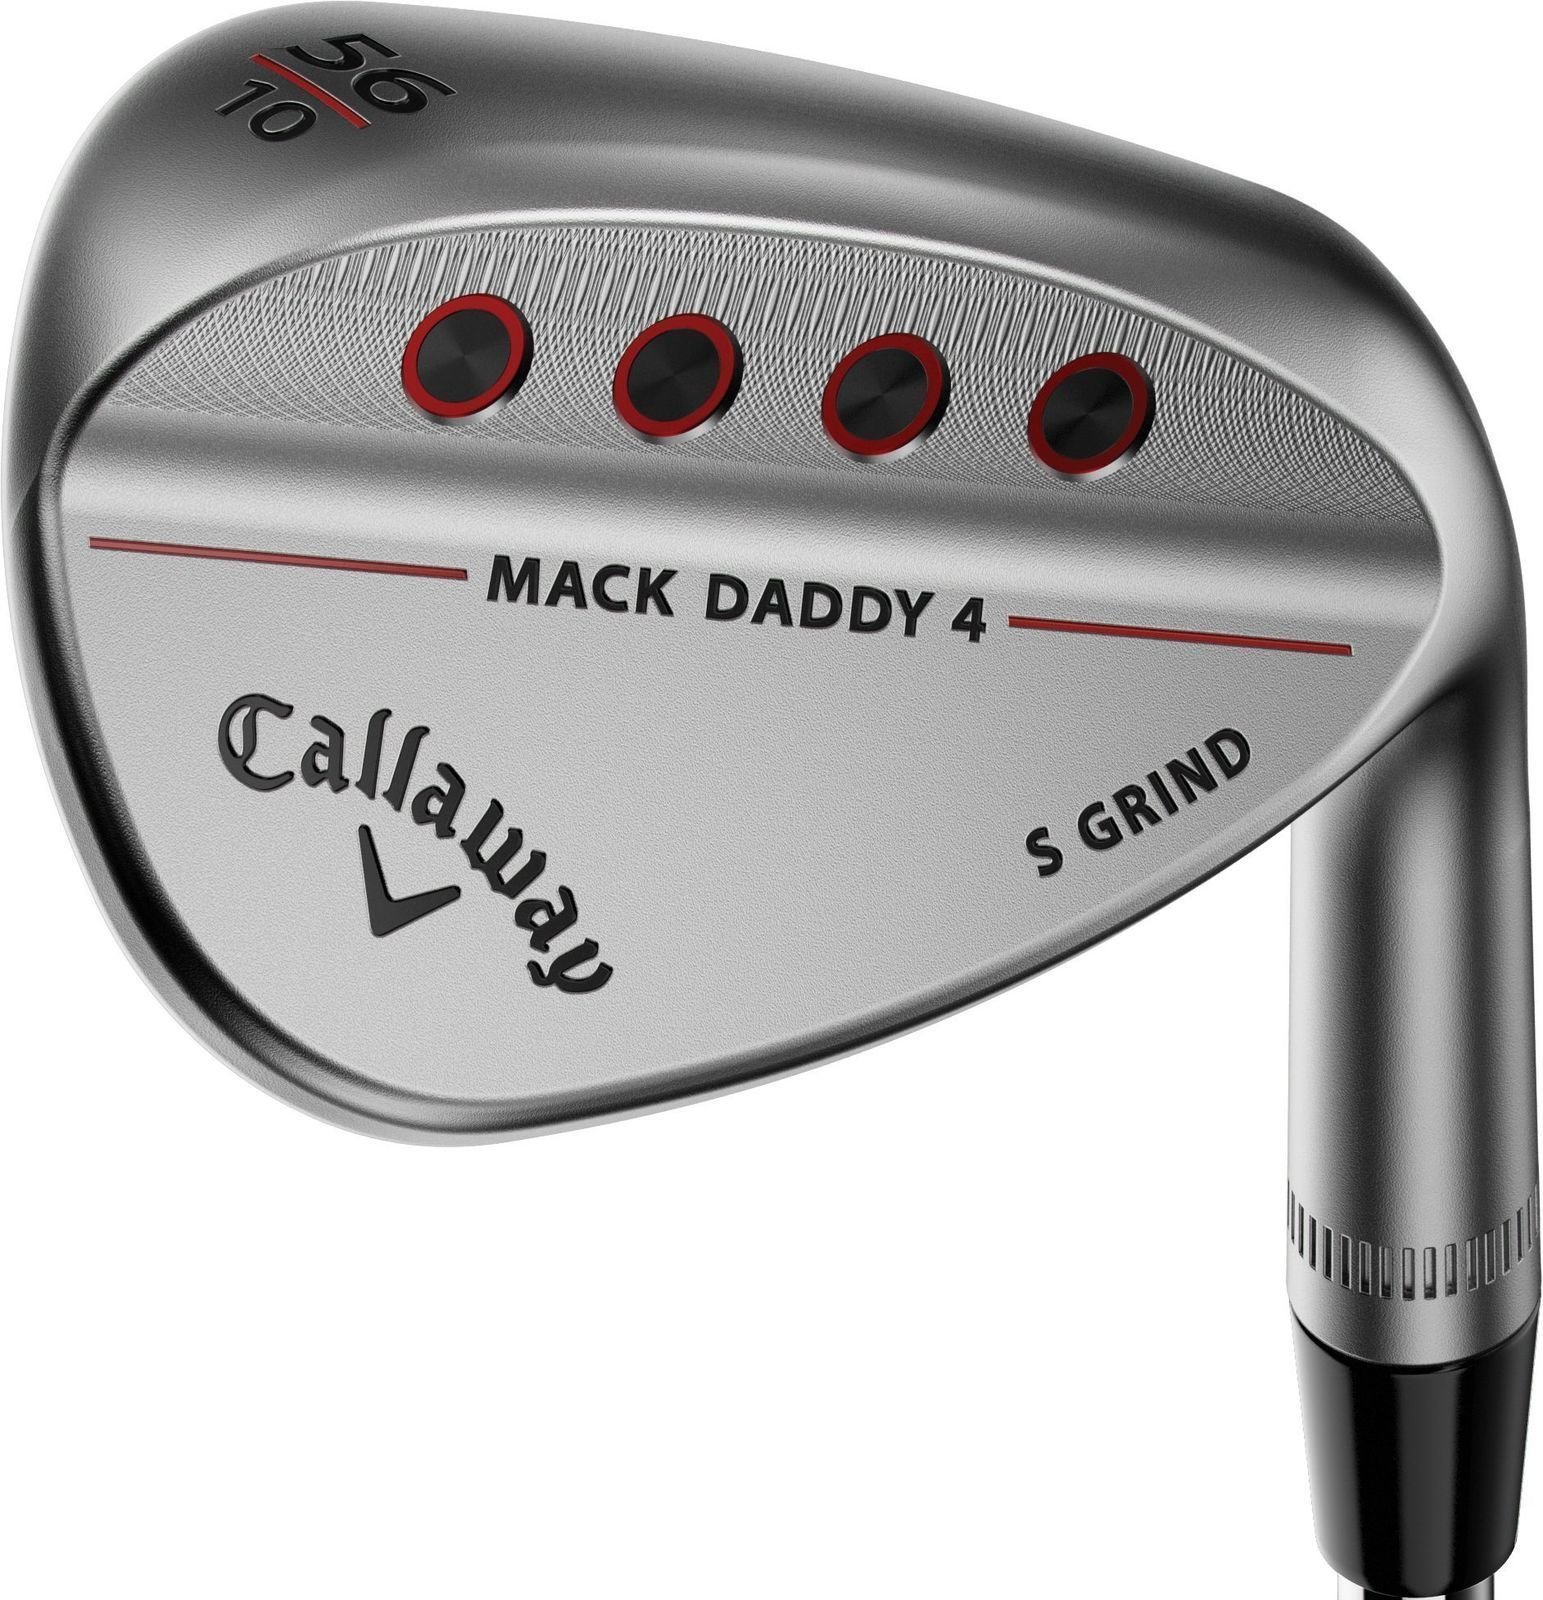 Mazza da golf - wedge Callaway Mack Daddy 4 Chrome Wedge 56-08 C-Grind destro